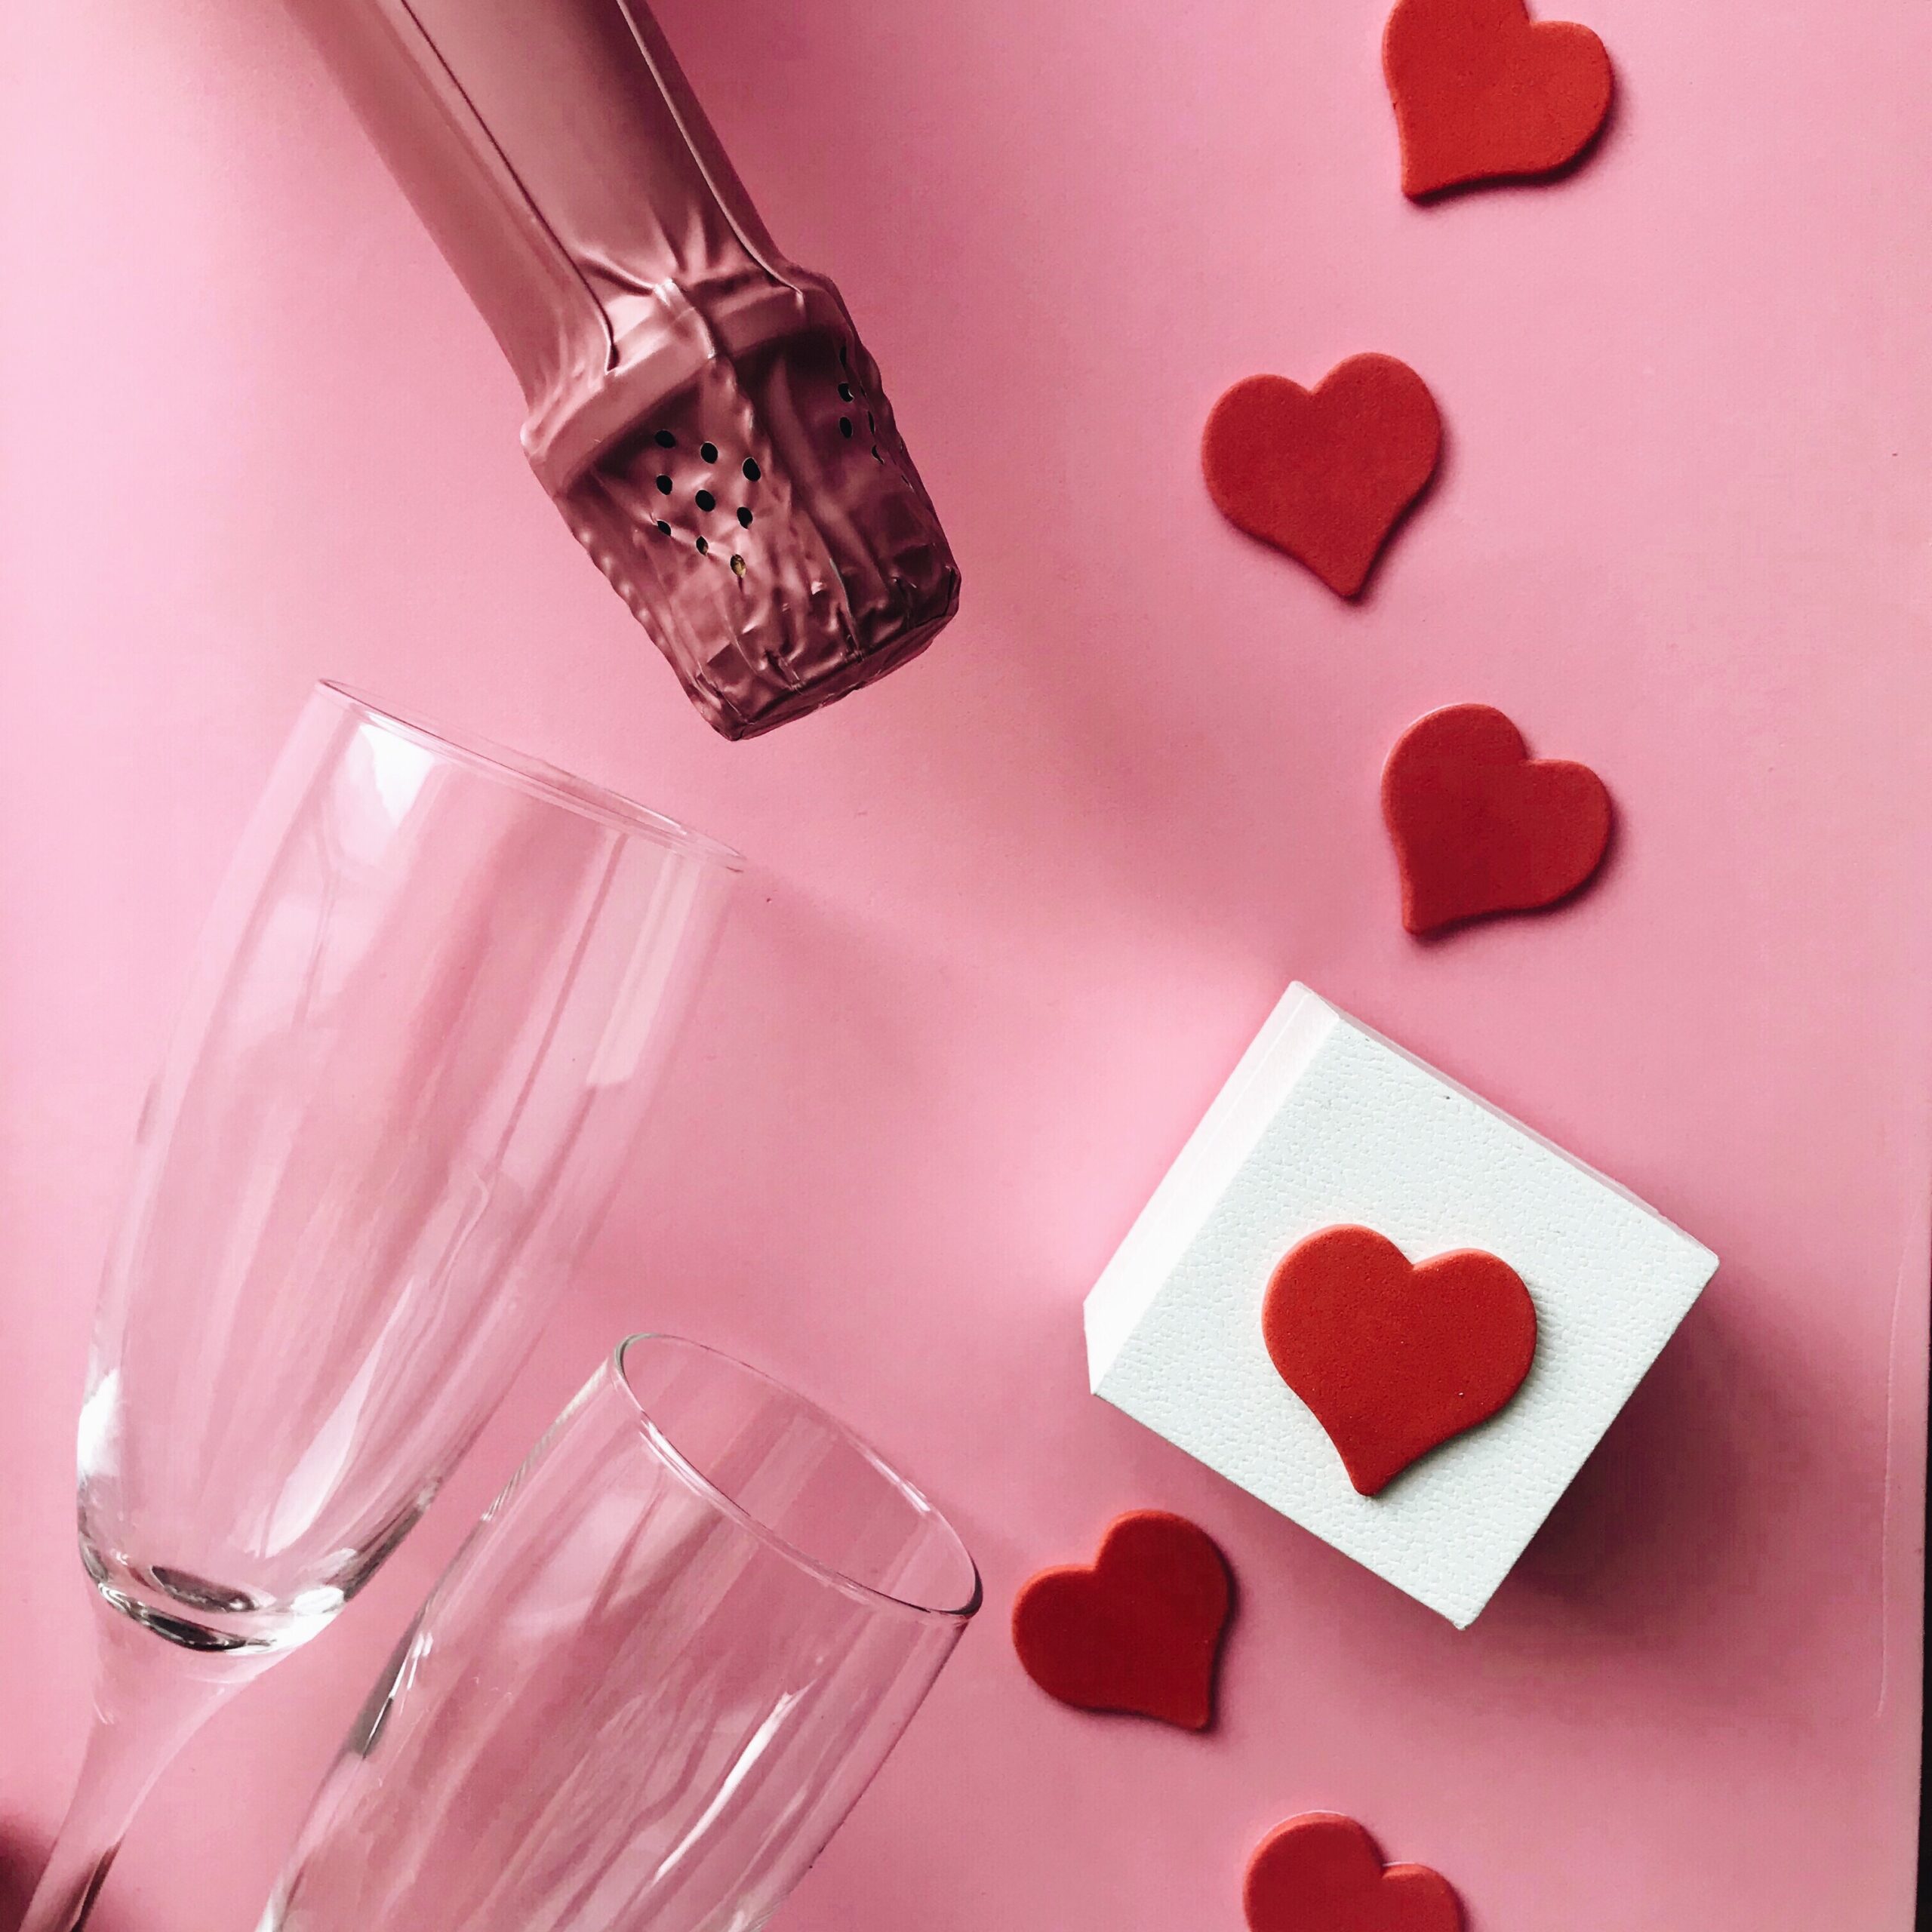 Happy Valentine's Day Image Free Download 2022